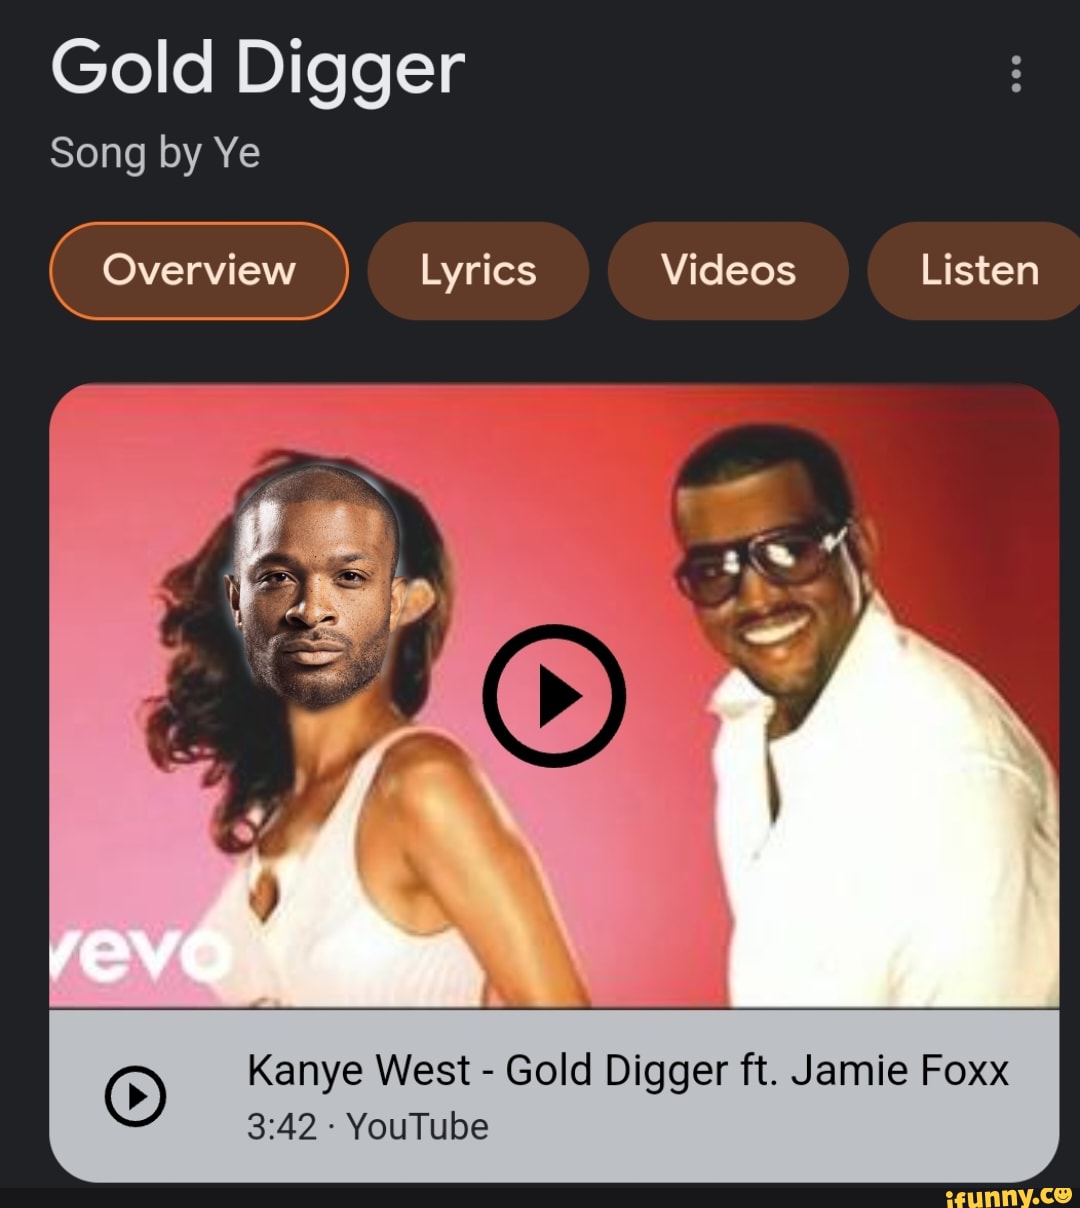 Gold digger - Kanye West, Jamie Foxx #speedsongs #kanyewest